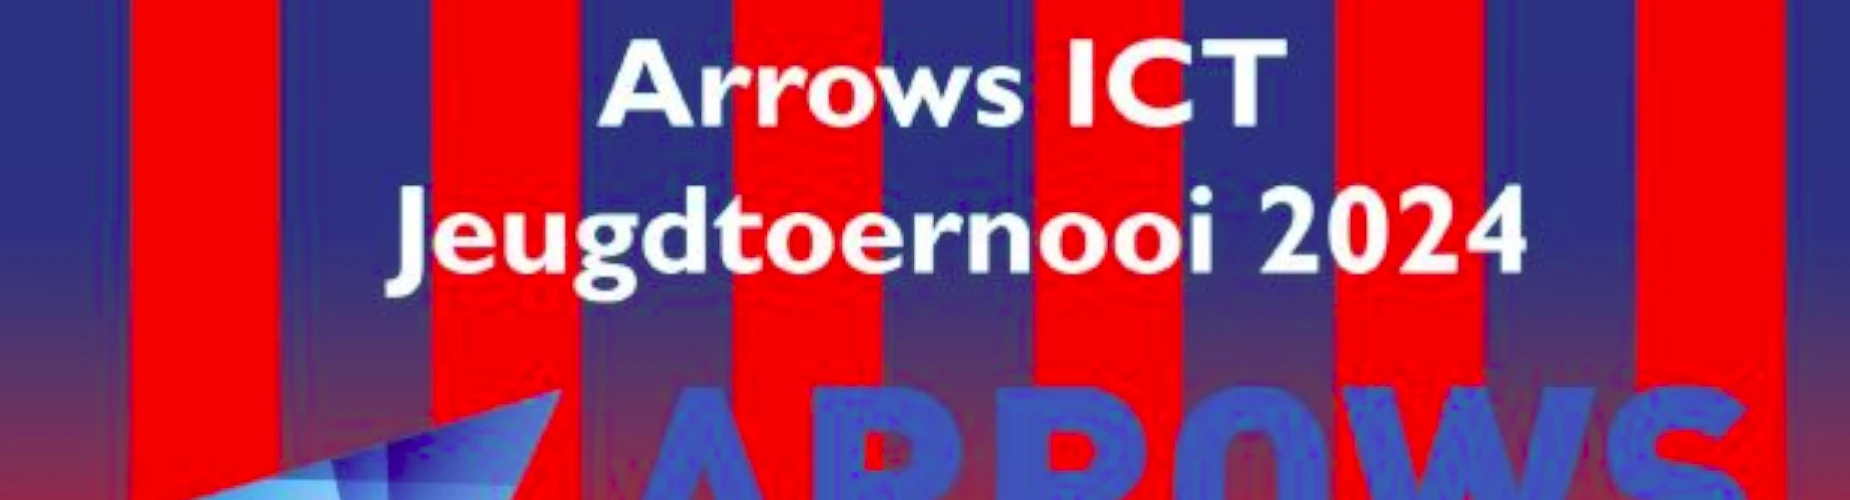 Banner - JO8 - Arrows ICT Jeugdtoernooi 2024 - RKVB - Baexem